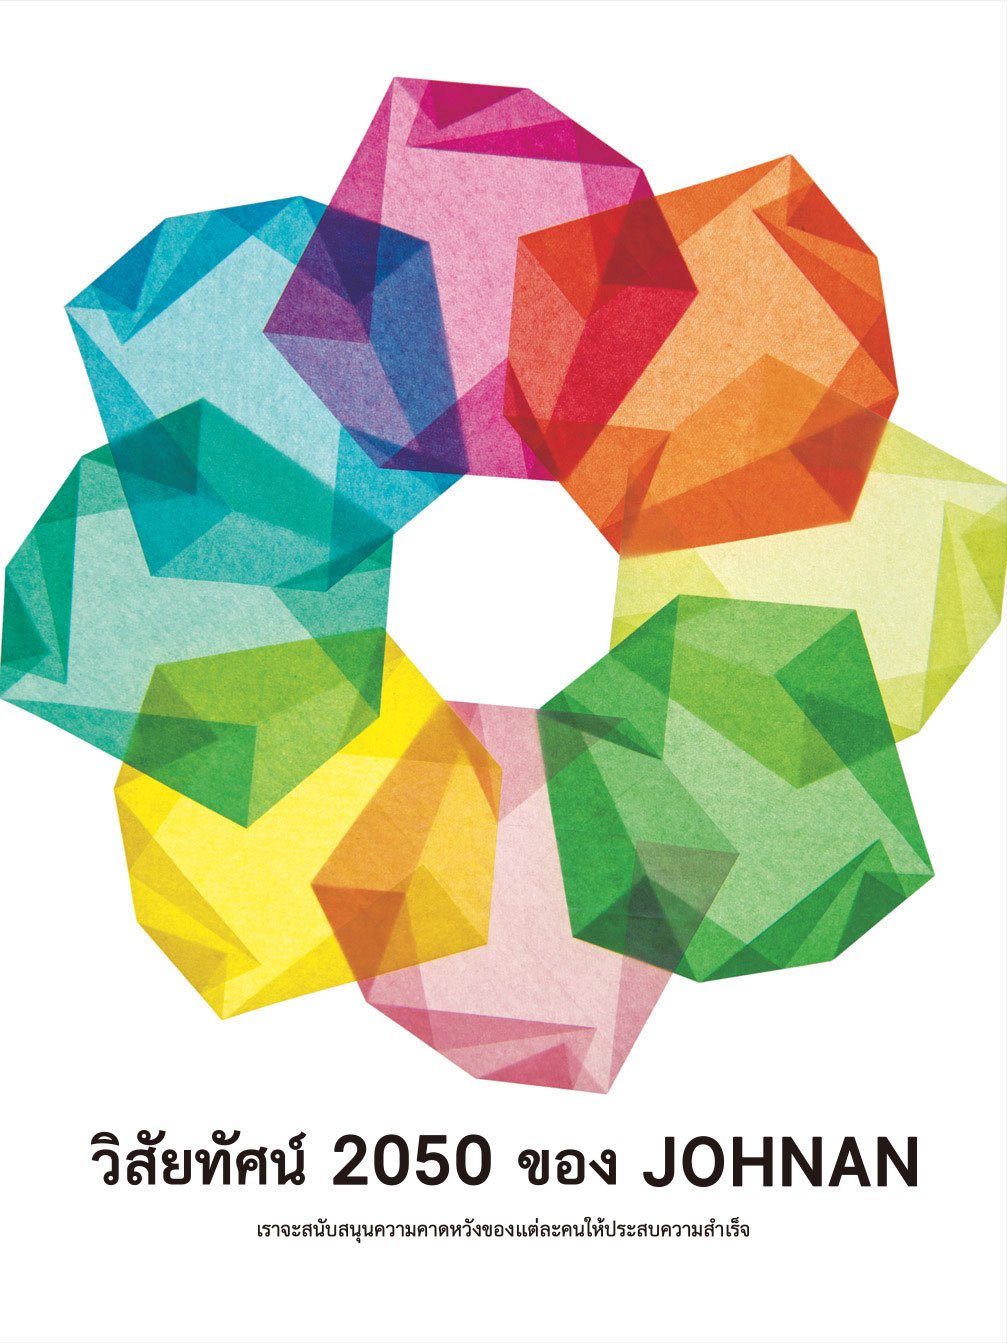 PDFイメージ画像:JOHNAN VISION 2050 タイ語Ver.